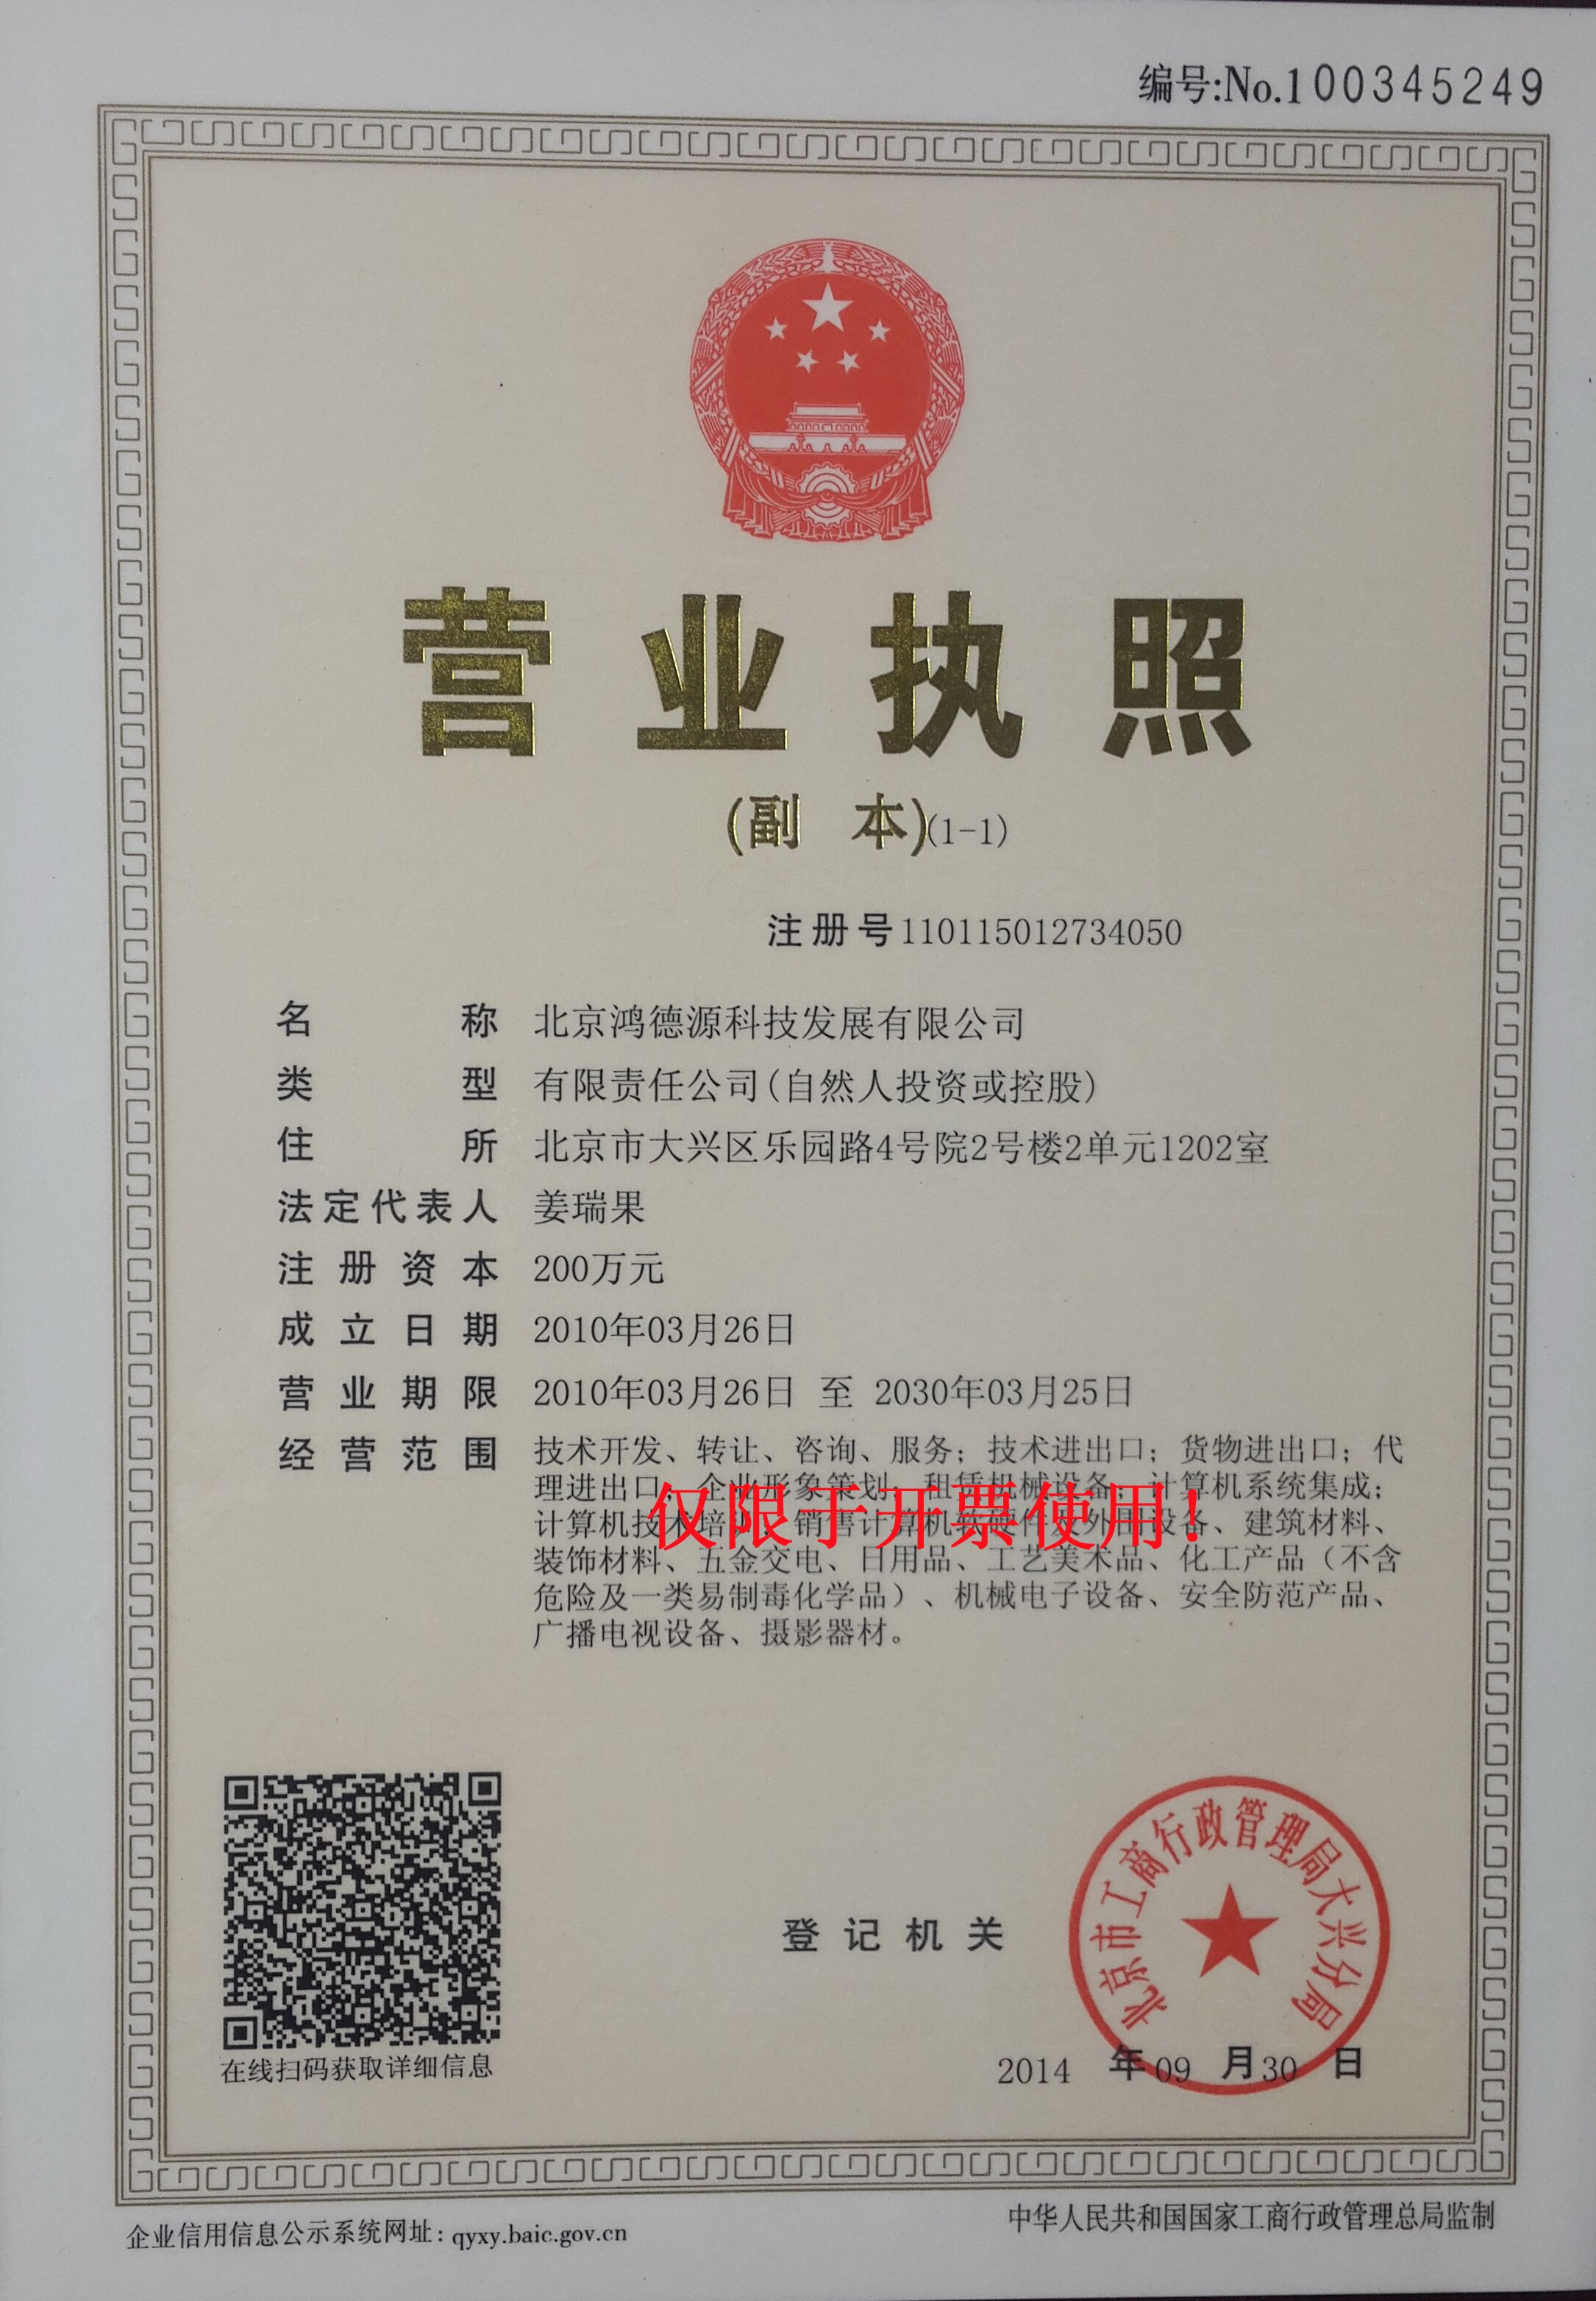 Beijing HDY Technology Development Co.,Ltd